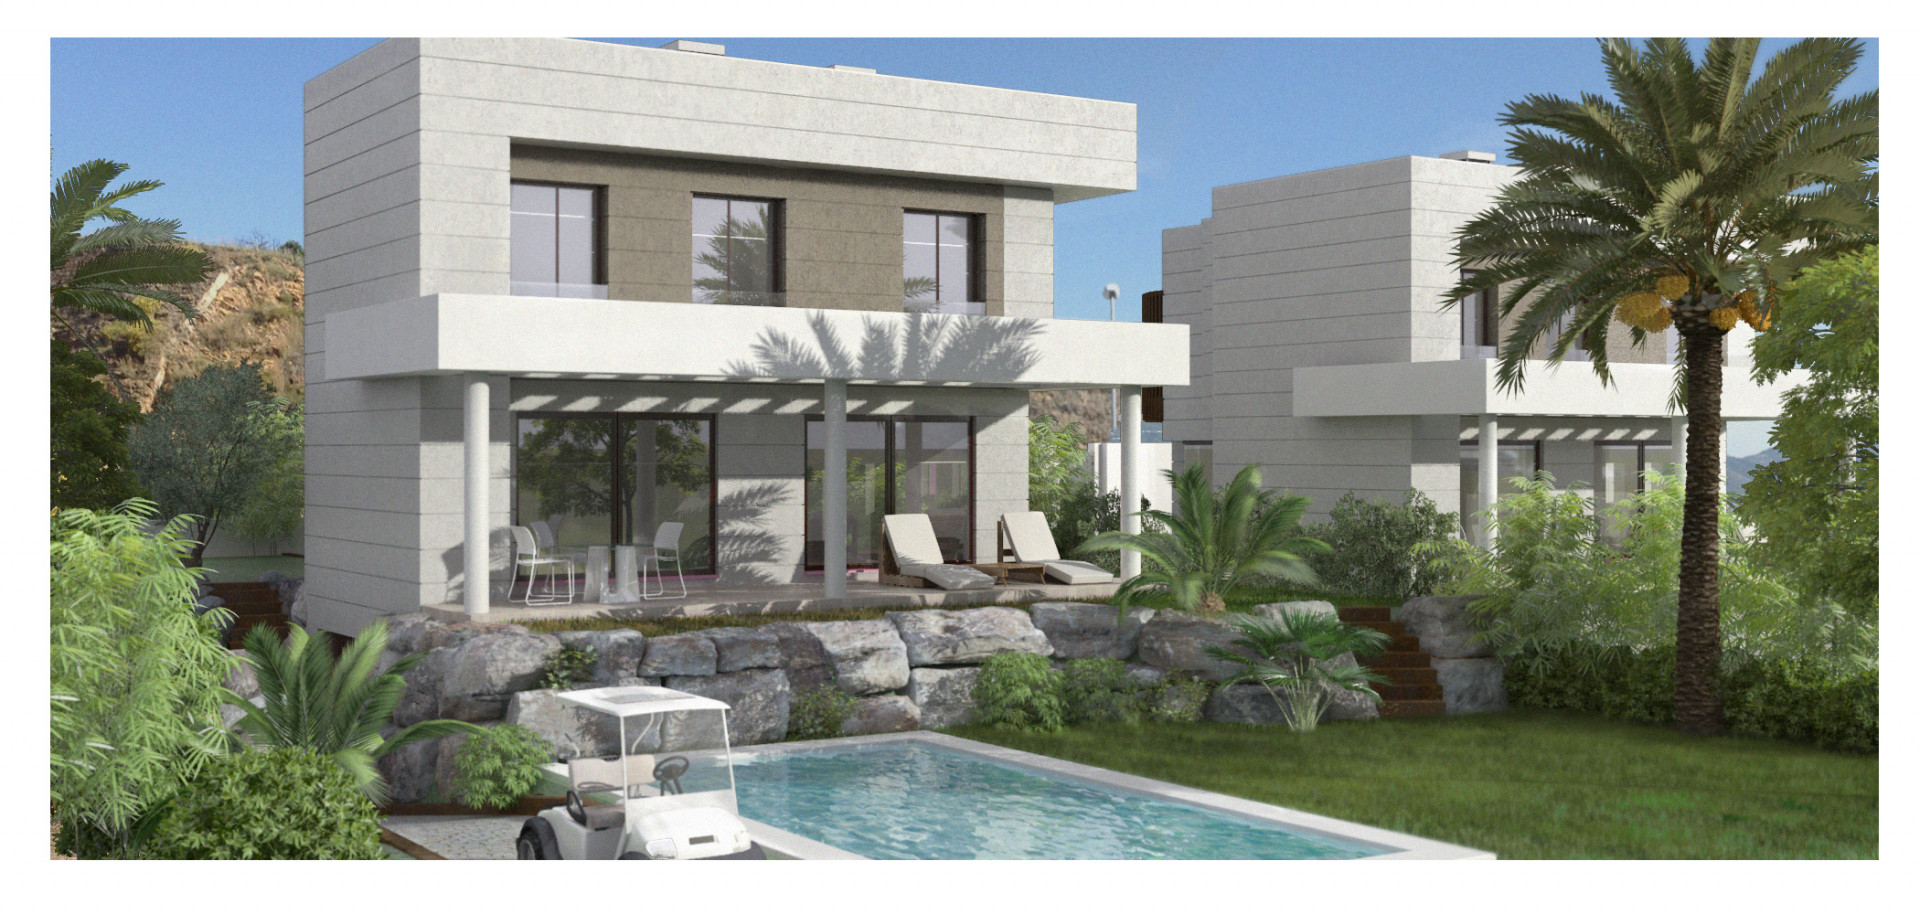 Bargain enclosed newly built first line golf modern golf villas for sale in Mijas - Costa del Sol